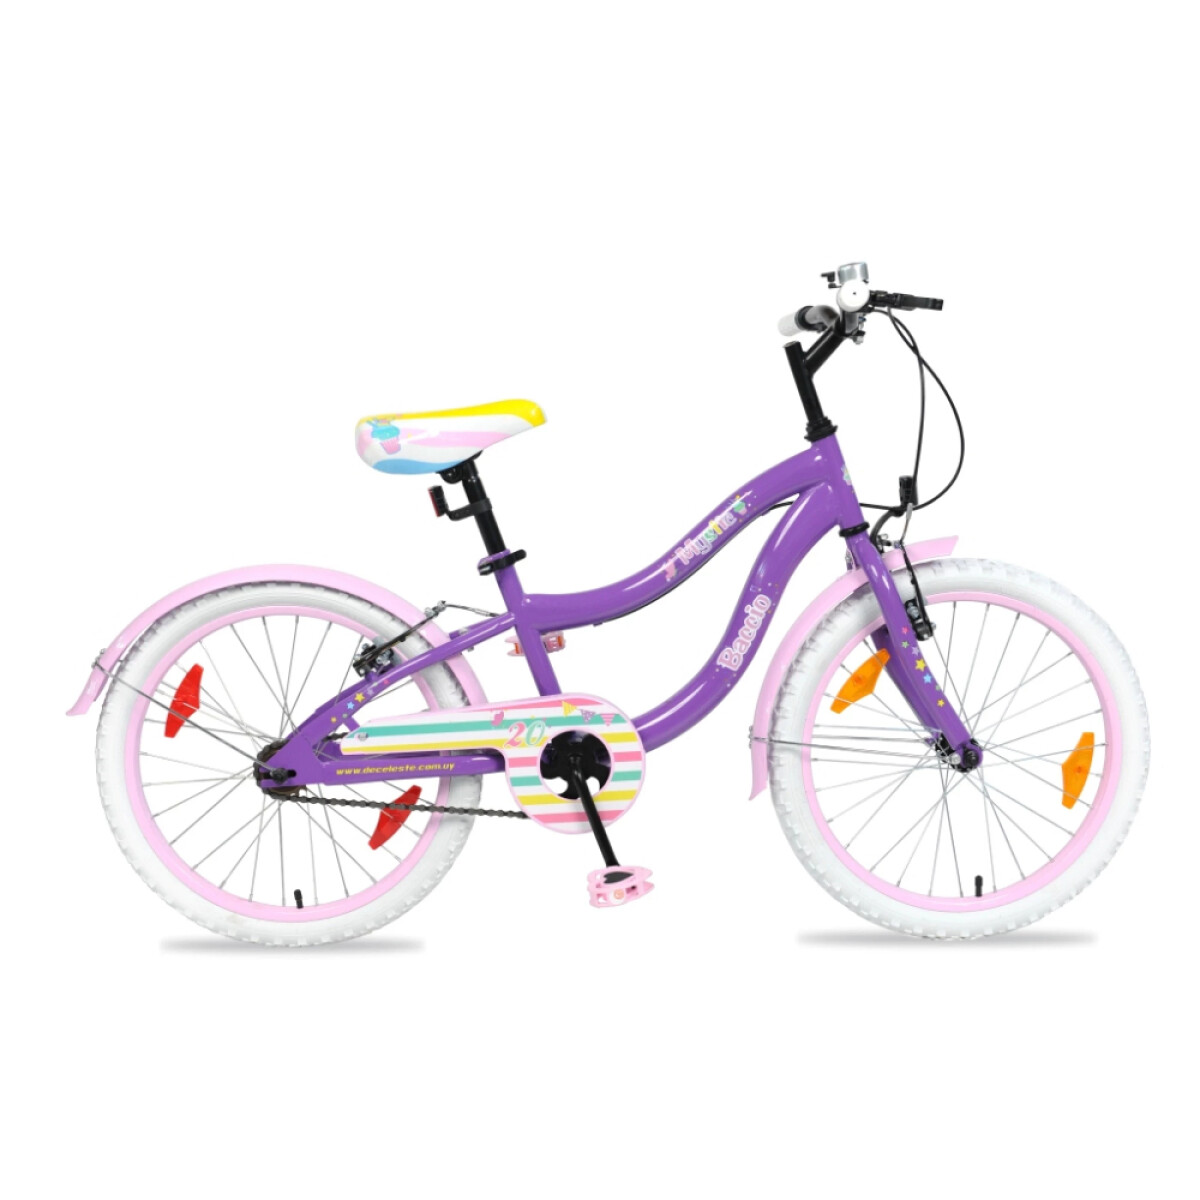 Bicicleta Baccio Mystic rodado 20 - Violeta 